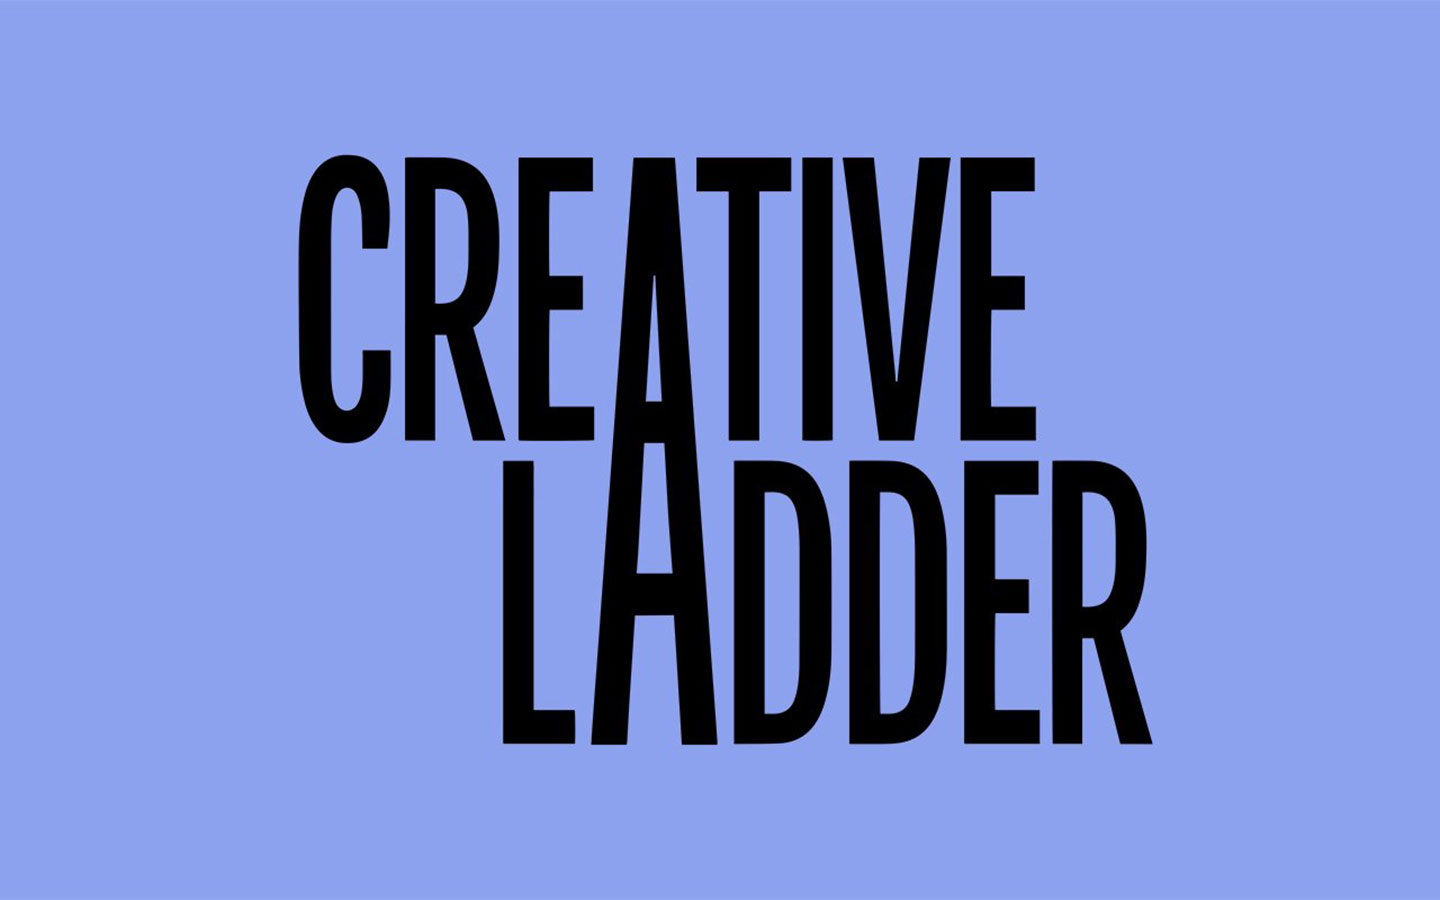 Ryan Reynolds - The Creative Ladder